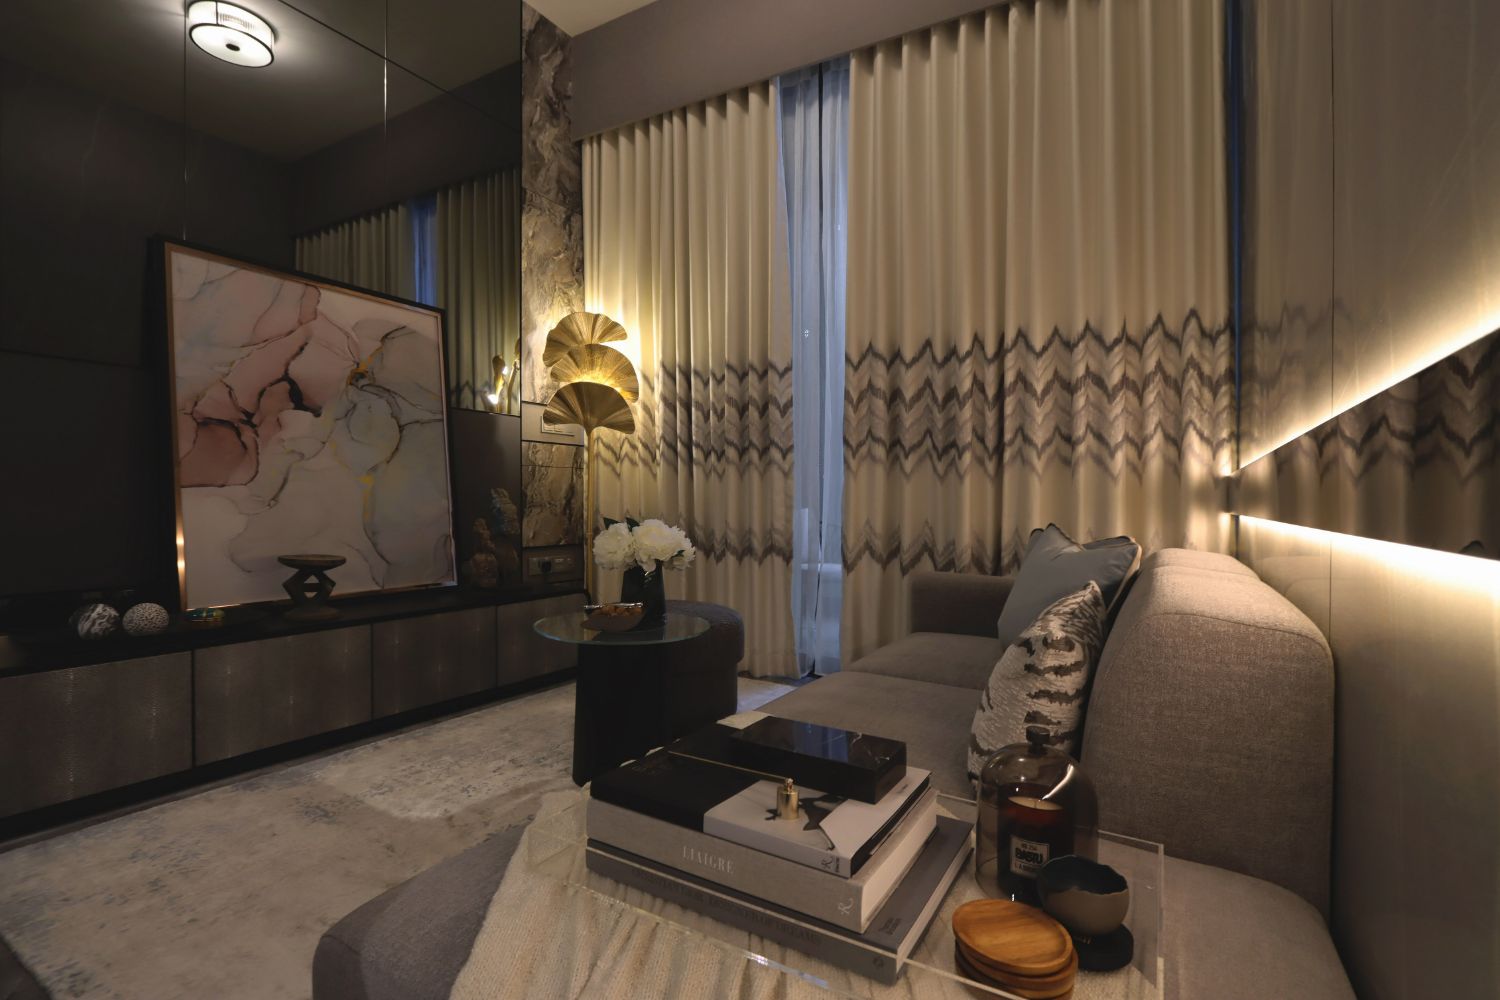 YWA Interior Apartments Midtown Bay 2 Bedroom Showflat Unit LIVING ROOM 002, Design Authority